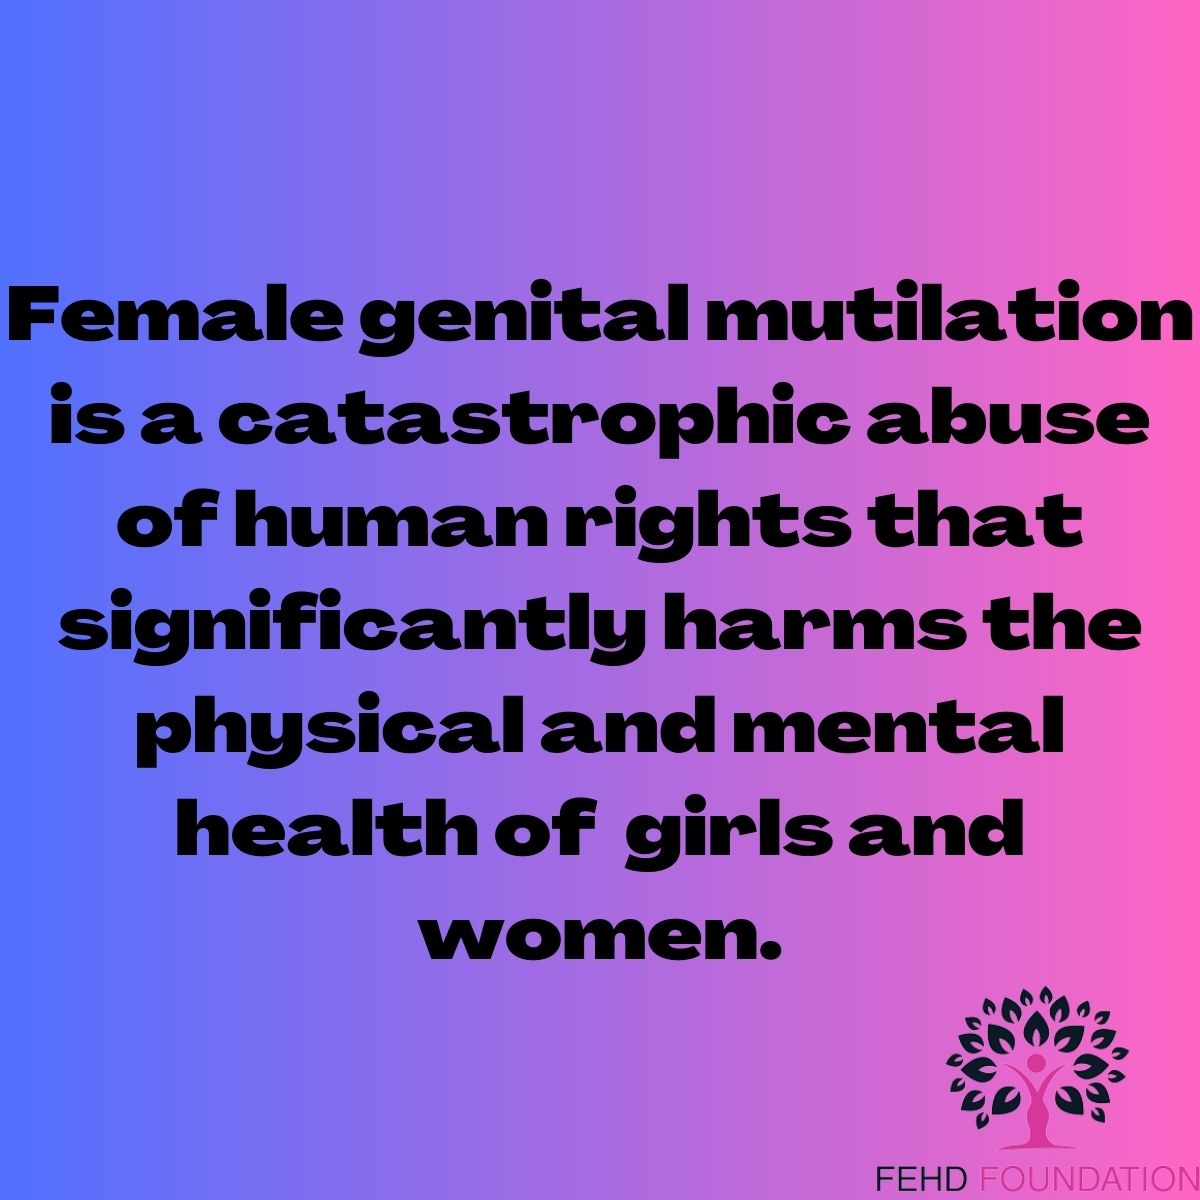 #EndFGM
#EndViolenceAgainstWomenandGirls